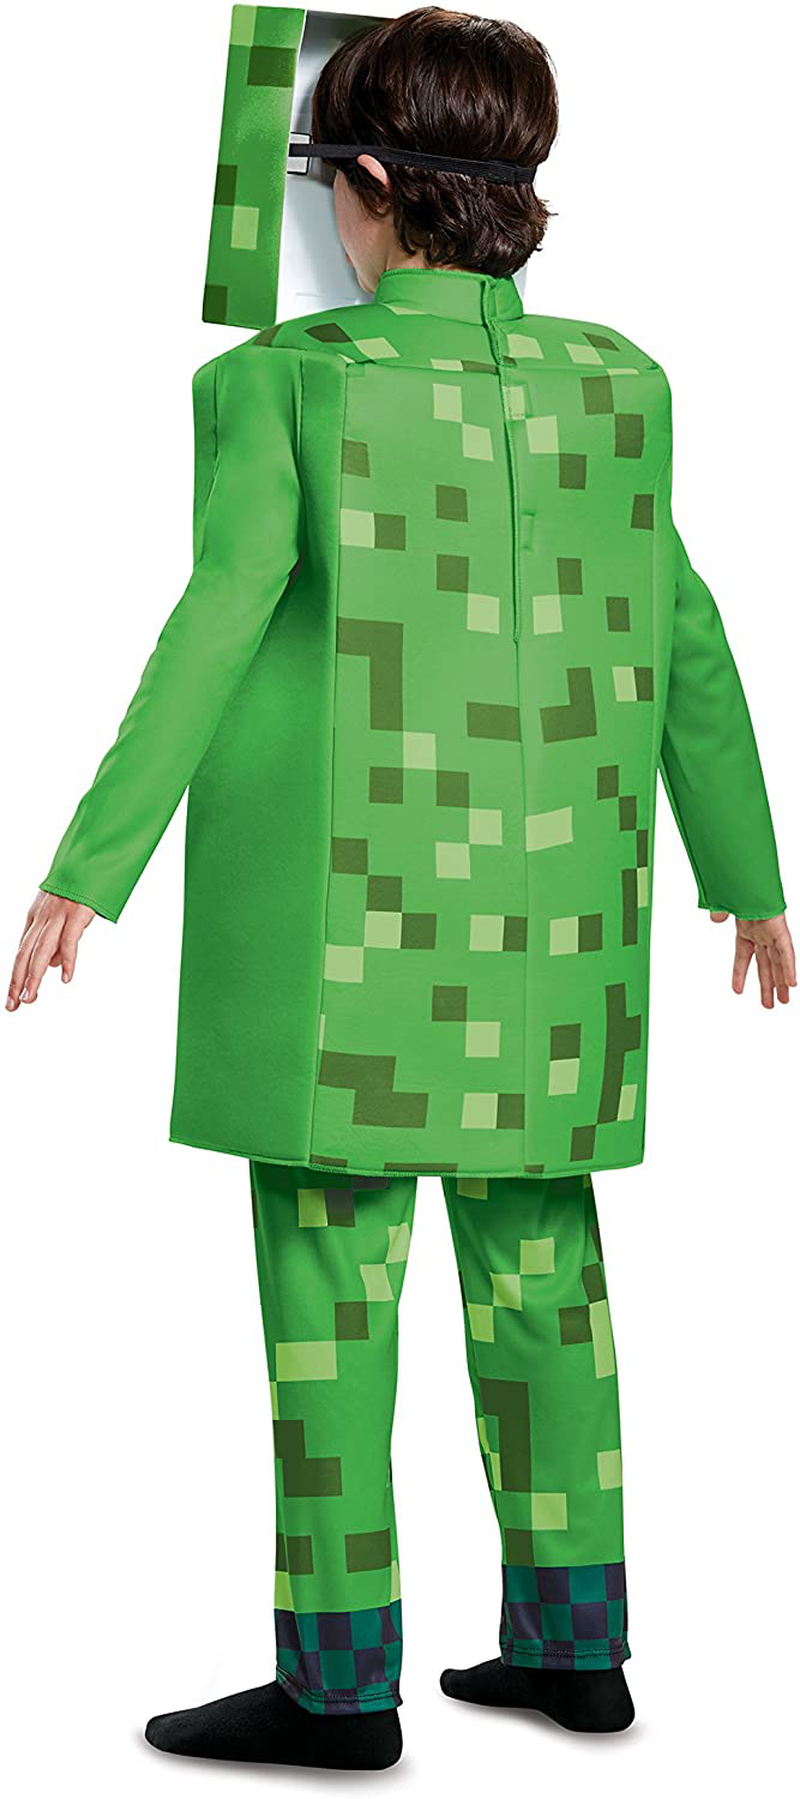 Creeper Deluxe Minecraft Costume, Green, Medium (7-8)